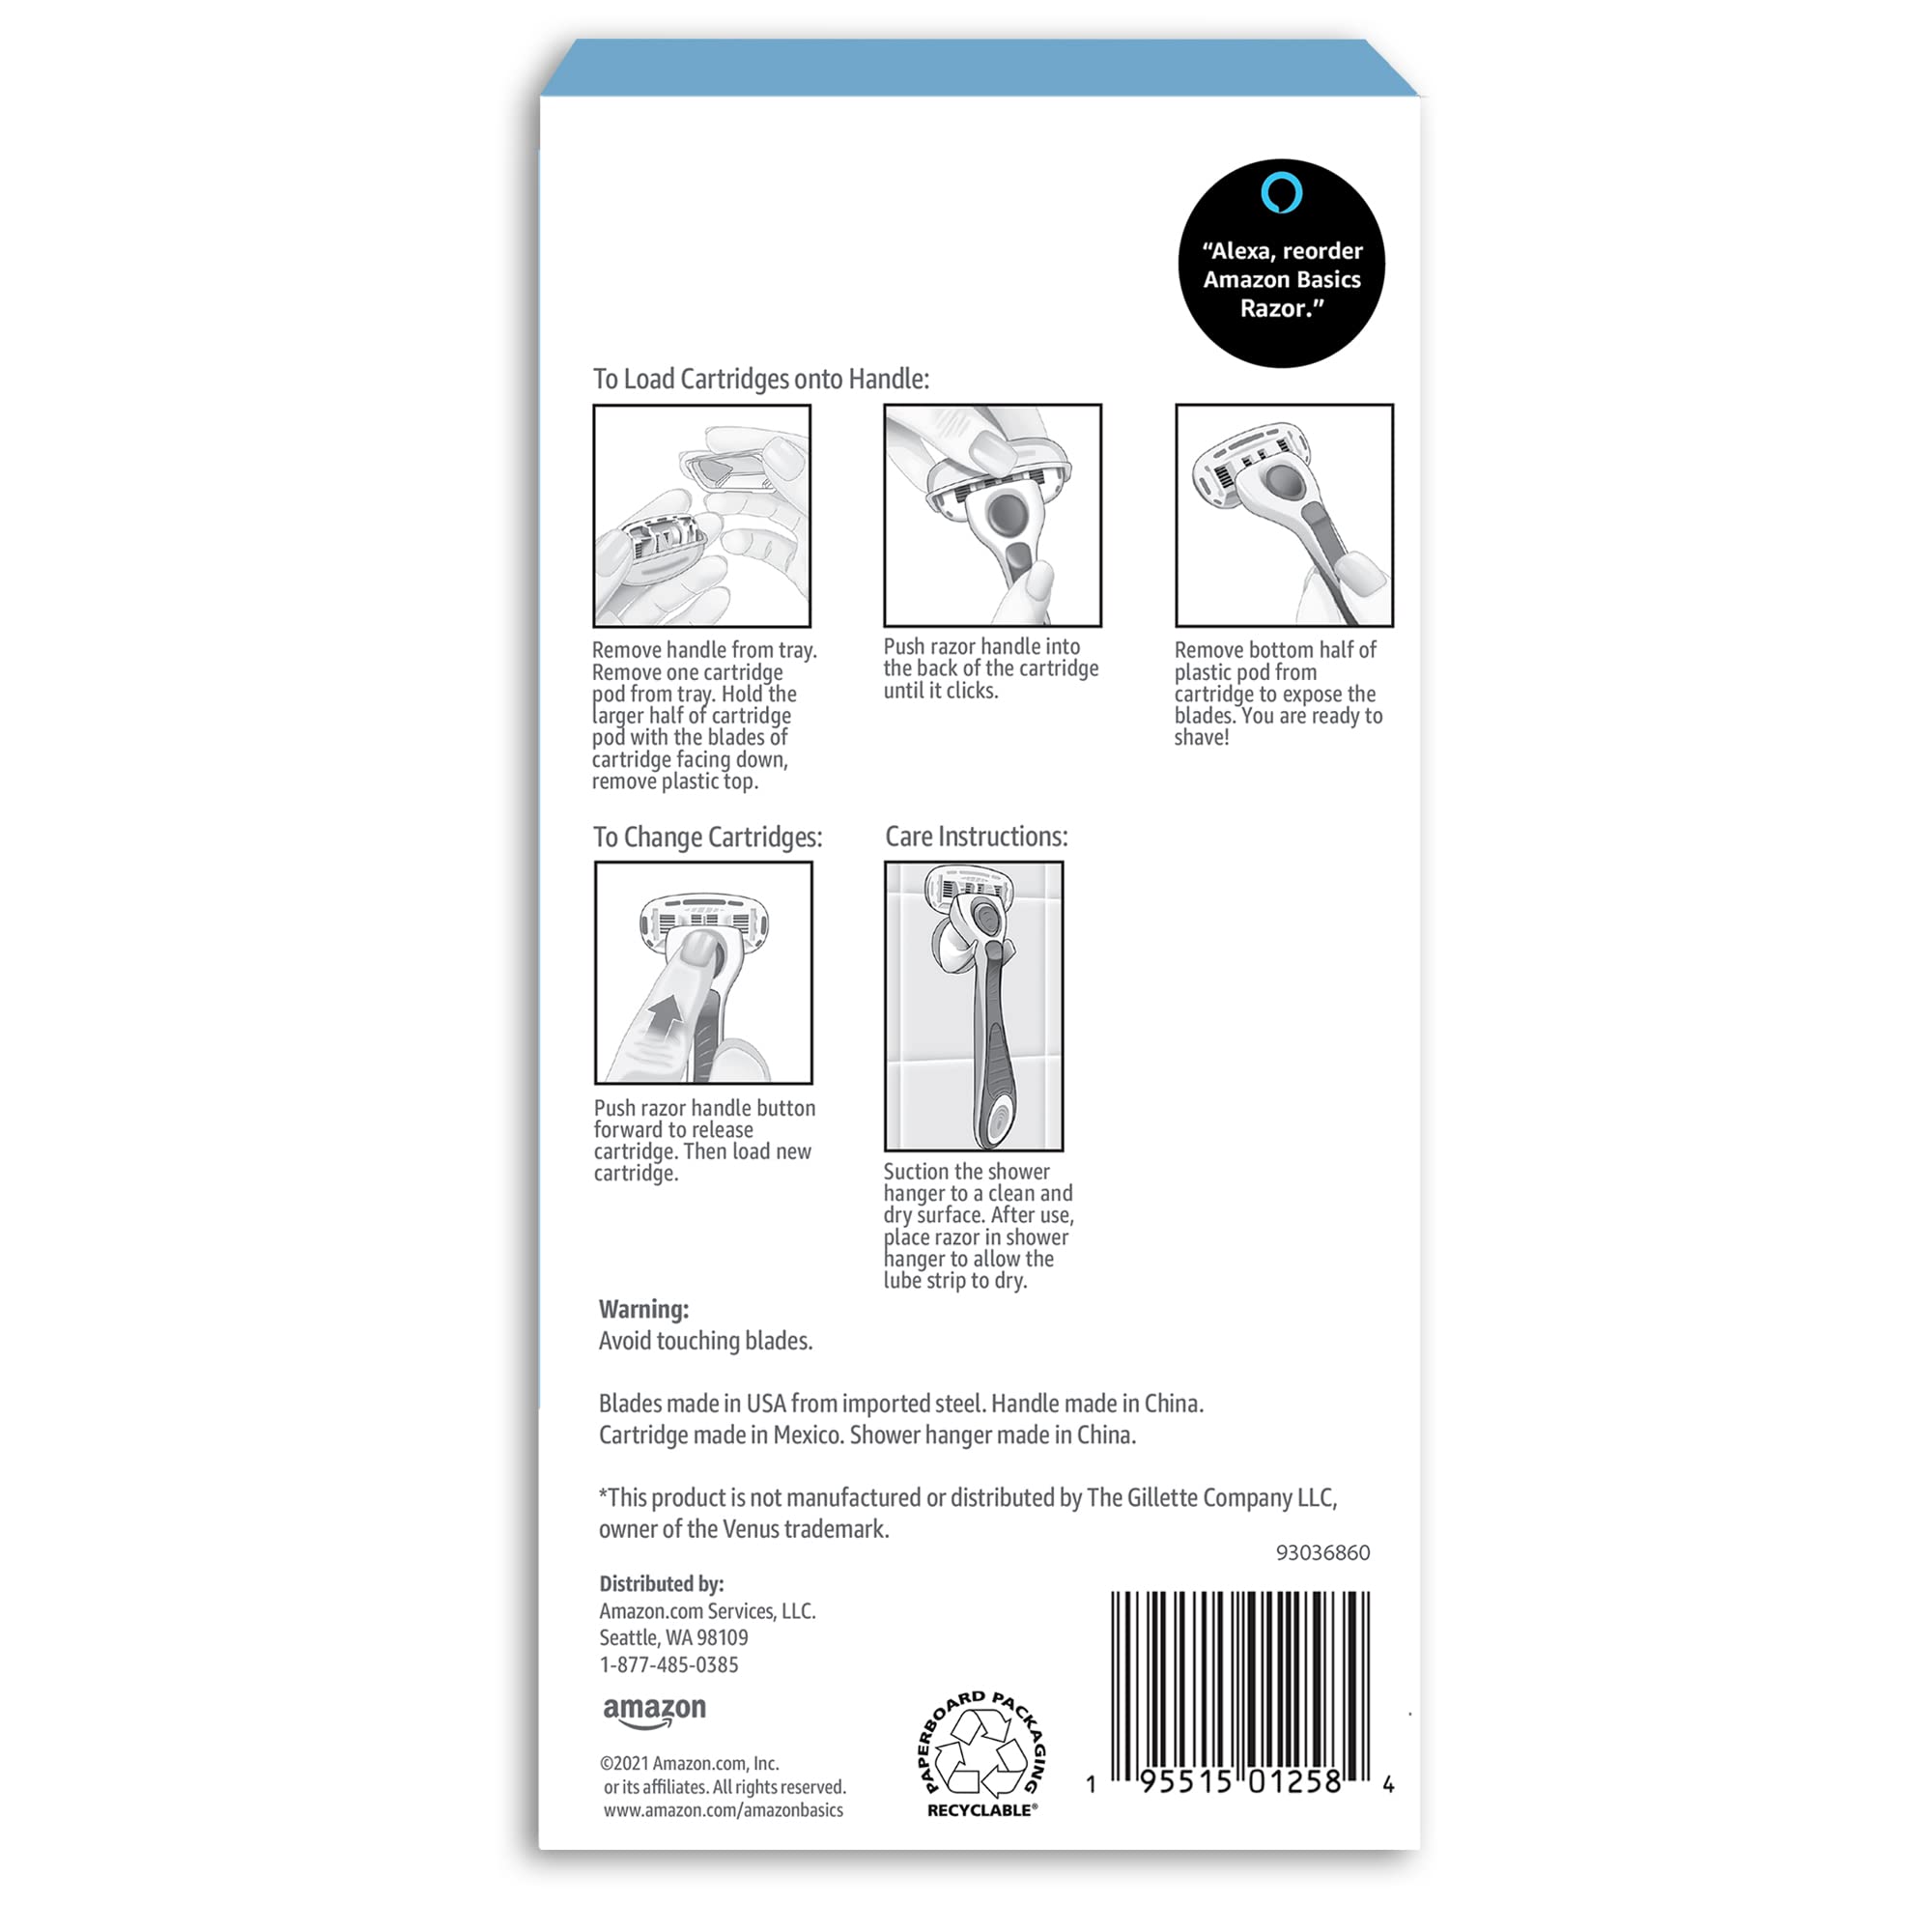 Amazon Basics 5-Blade Razor for Women, Handle, 12 Cartridges & Shower Hanger, Cartridges Fit Amazon Basics Razor Handles only, 14 Piece Set, Blue (Previously Solimo)